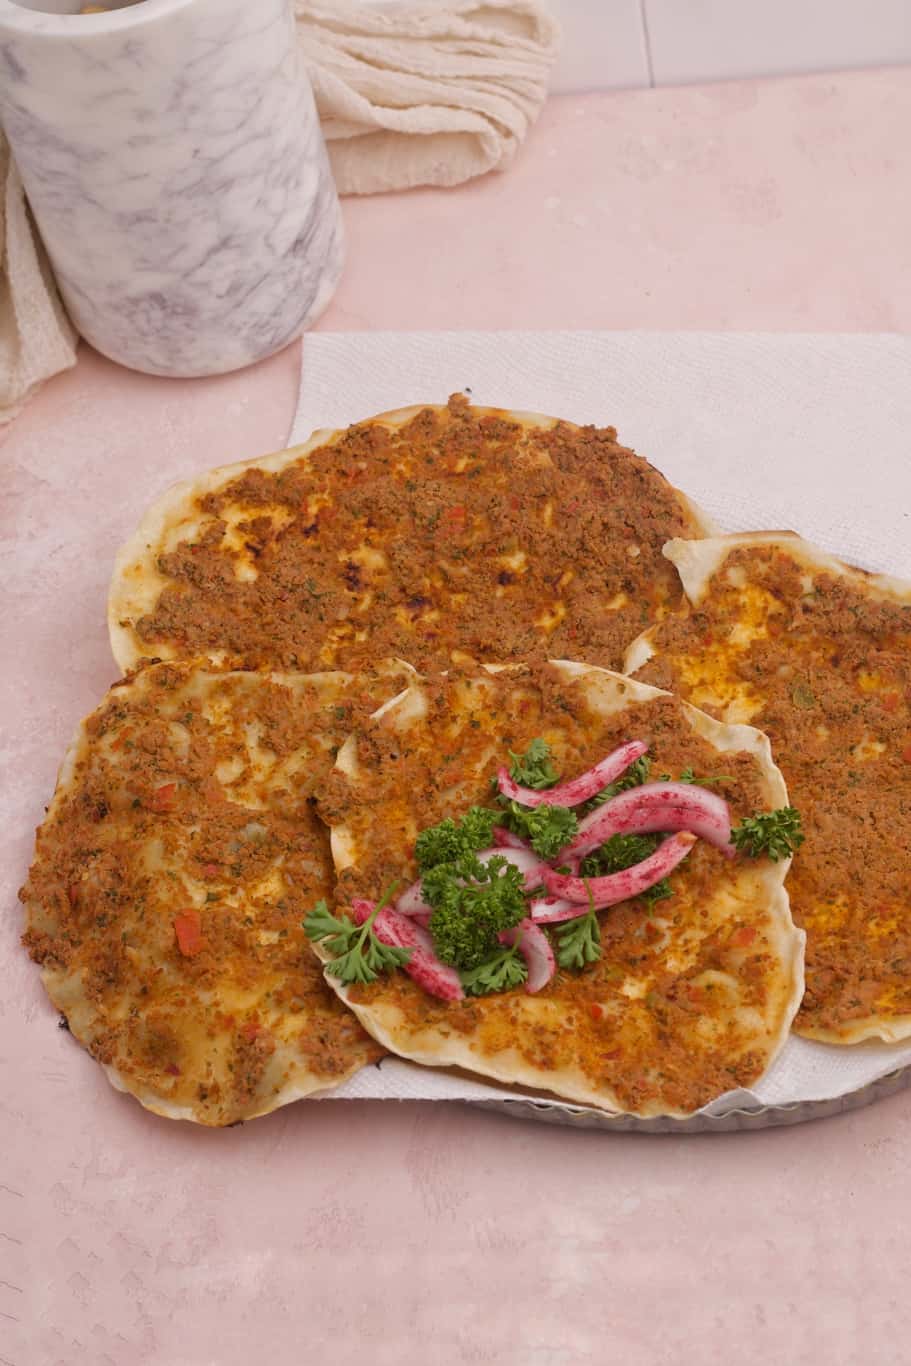 homemade turkish lahmajoun wraps with juicy beeg and veggies